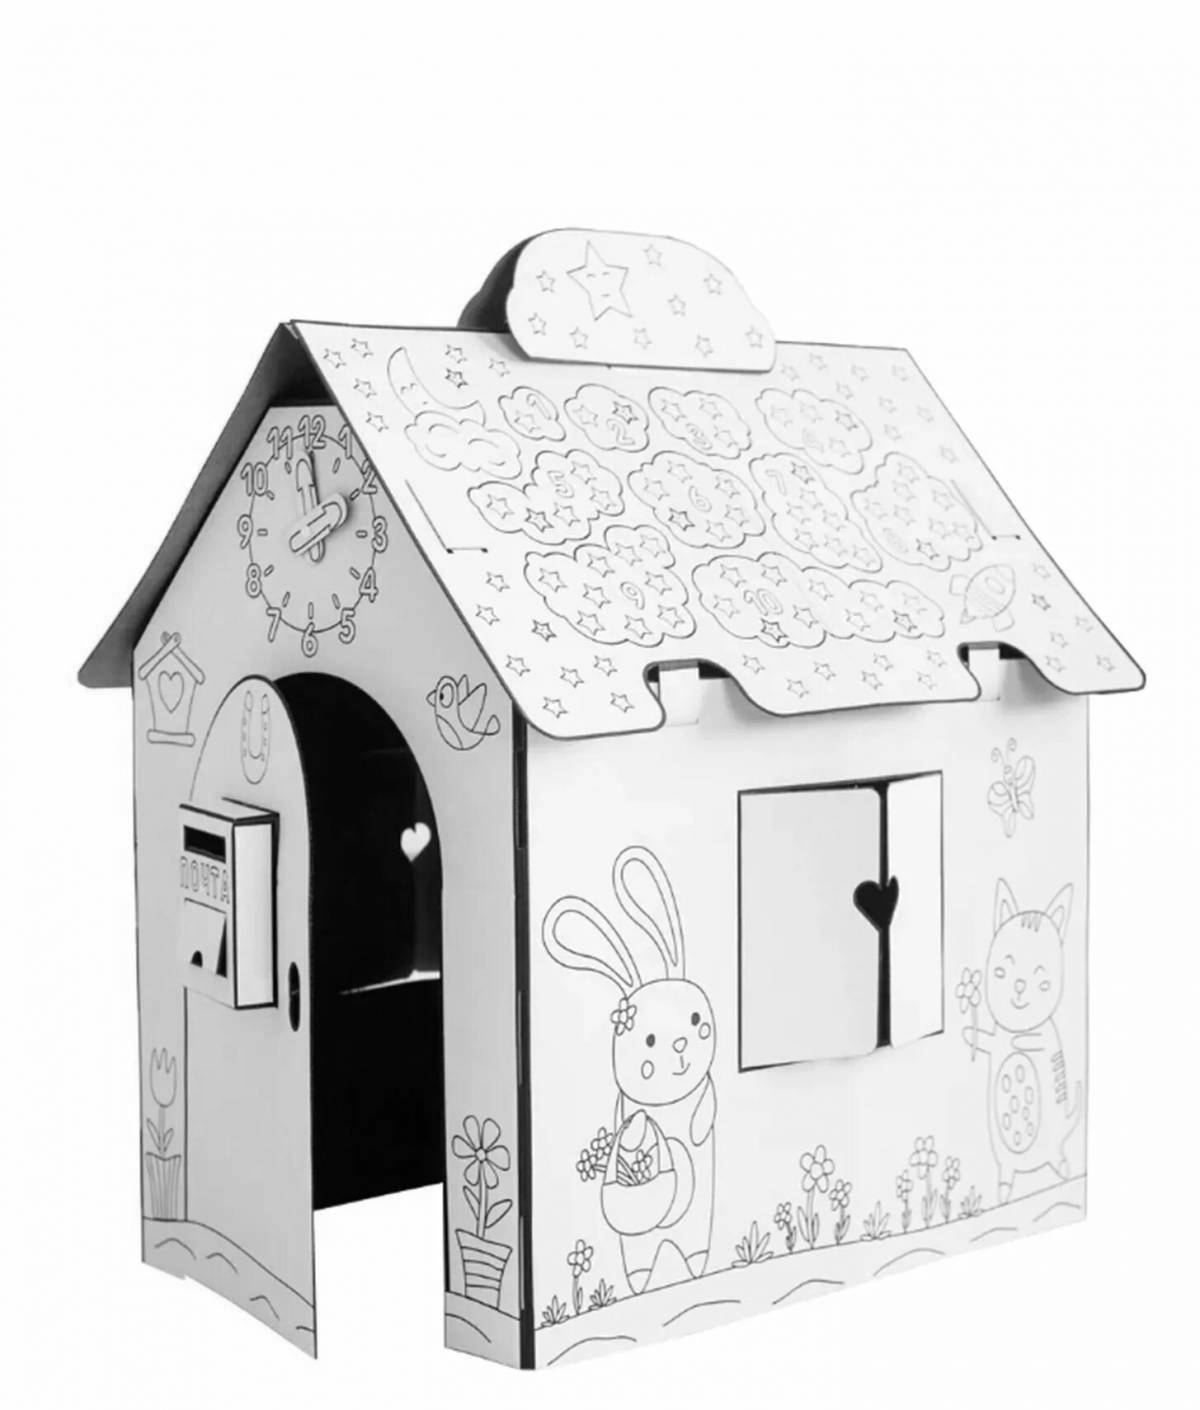 Cardboard playhouse #4